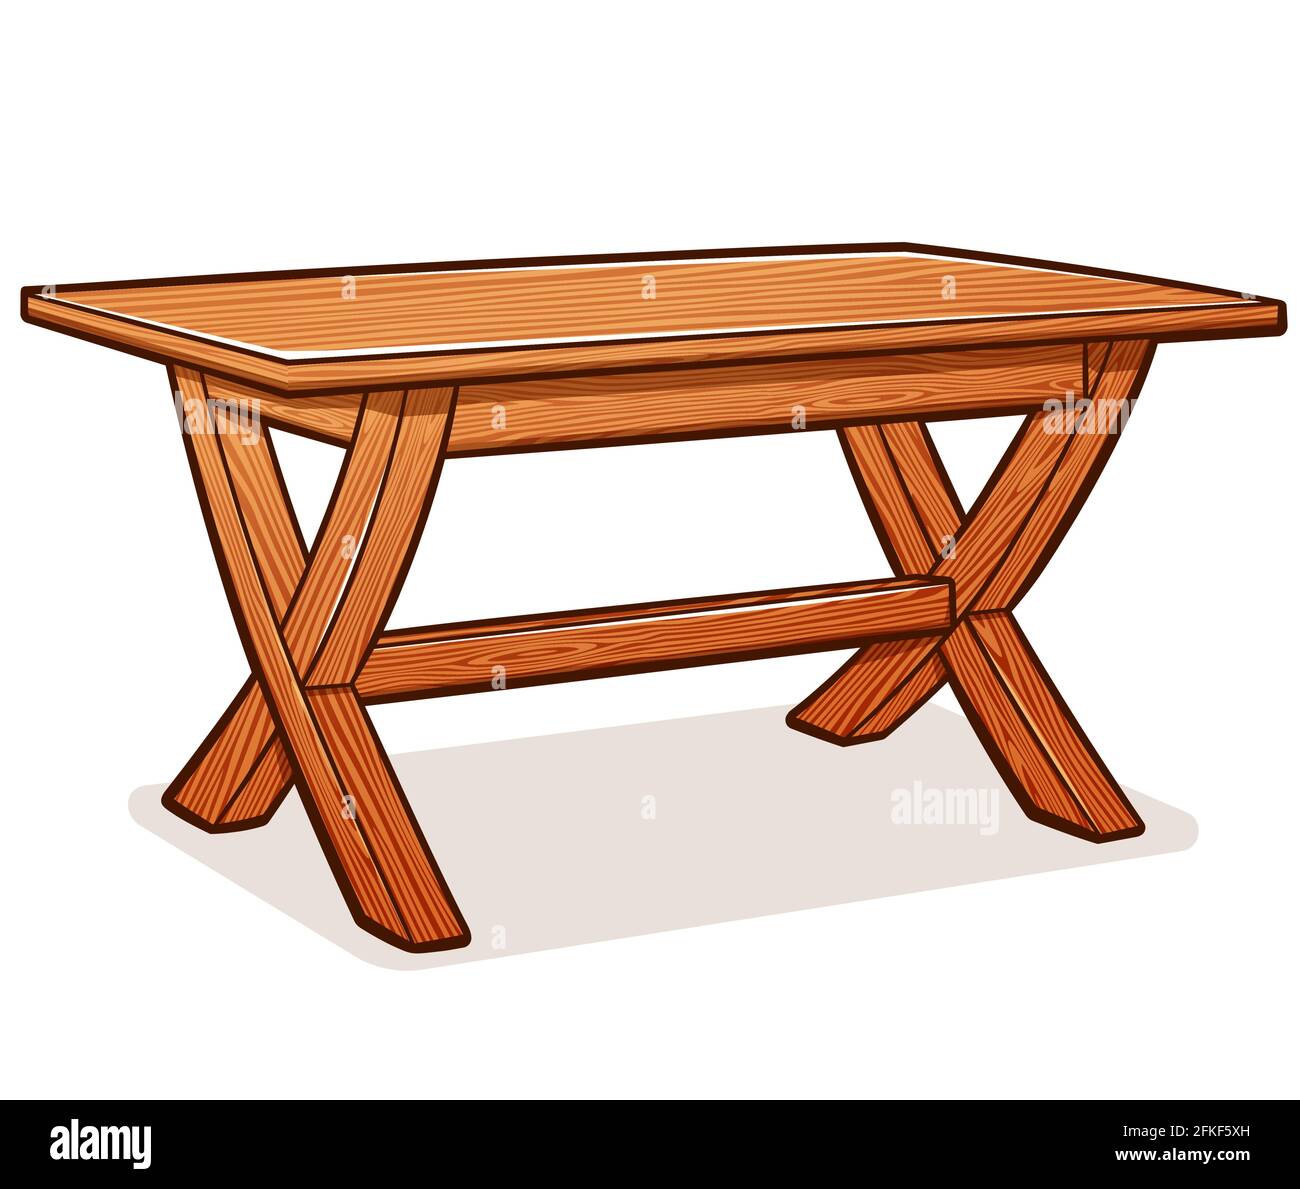 Vector illustration of rustic wooden table cartoon Stock Vector